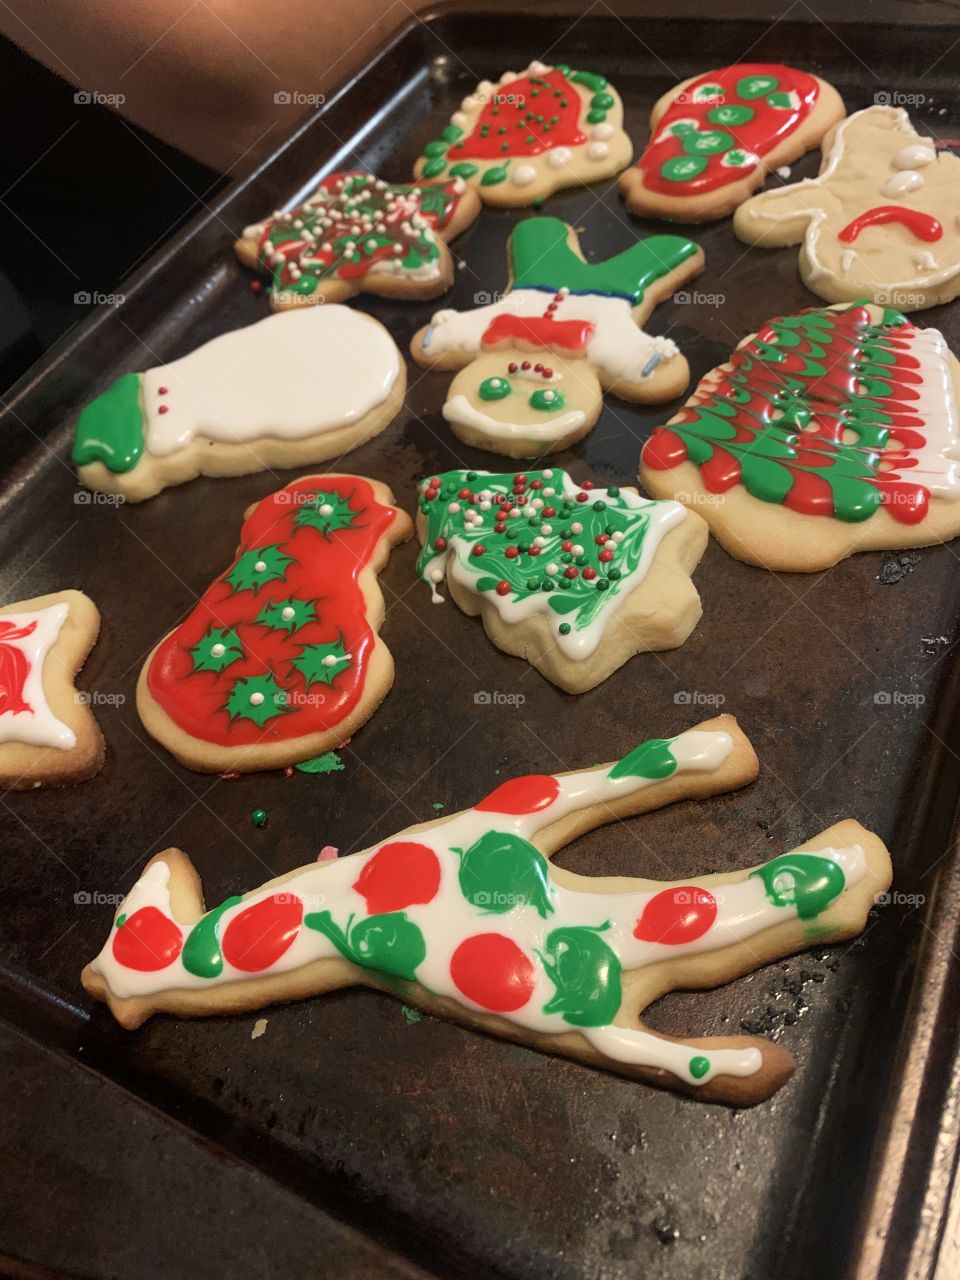 Cookies!